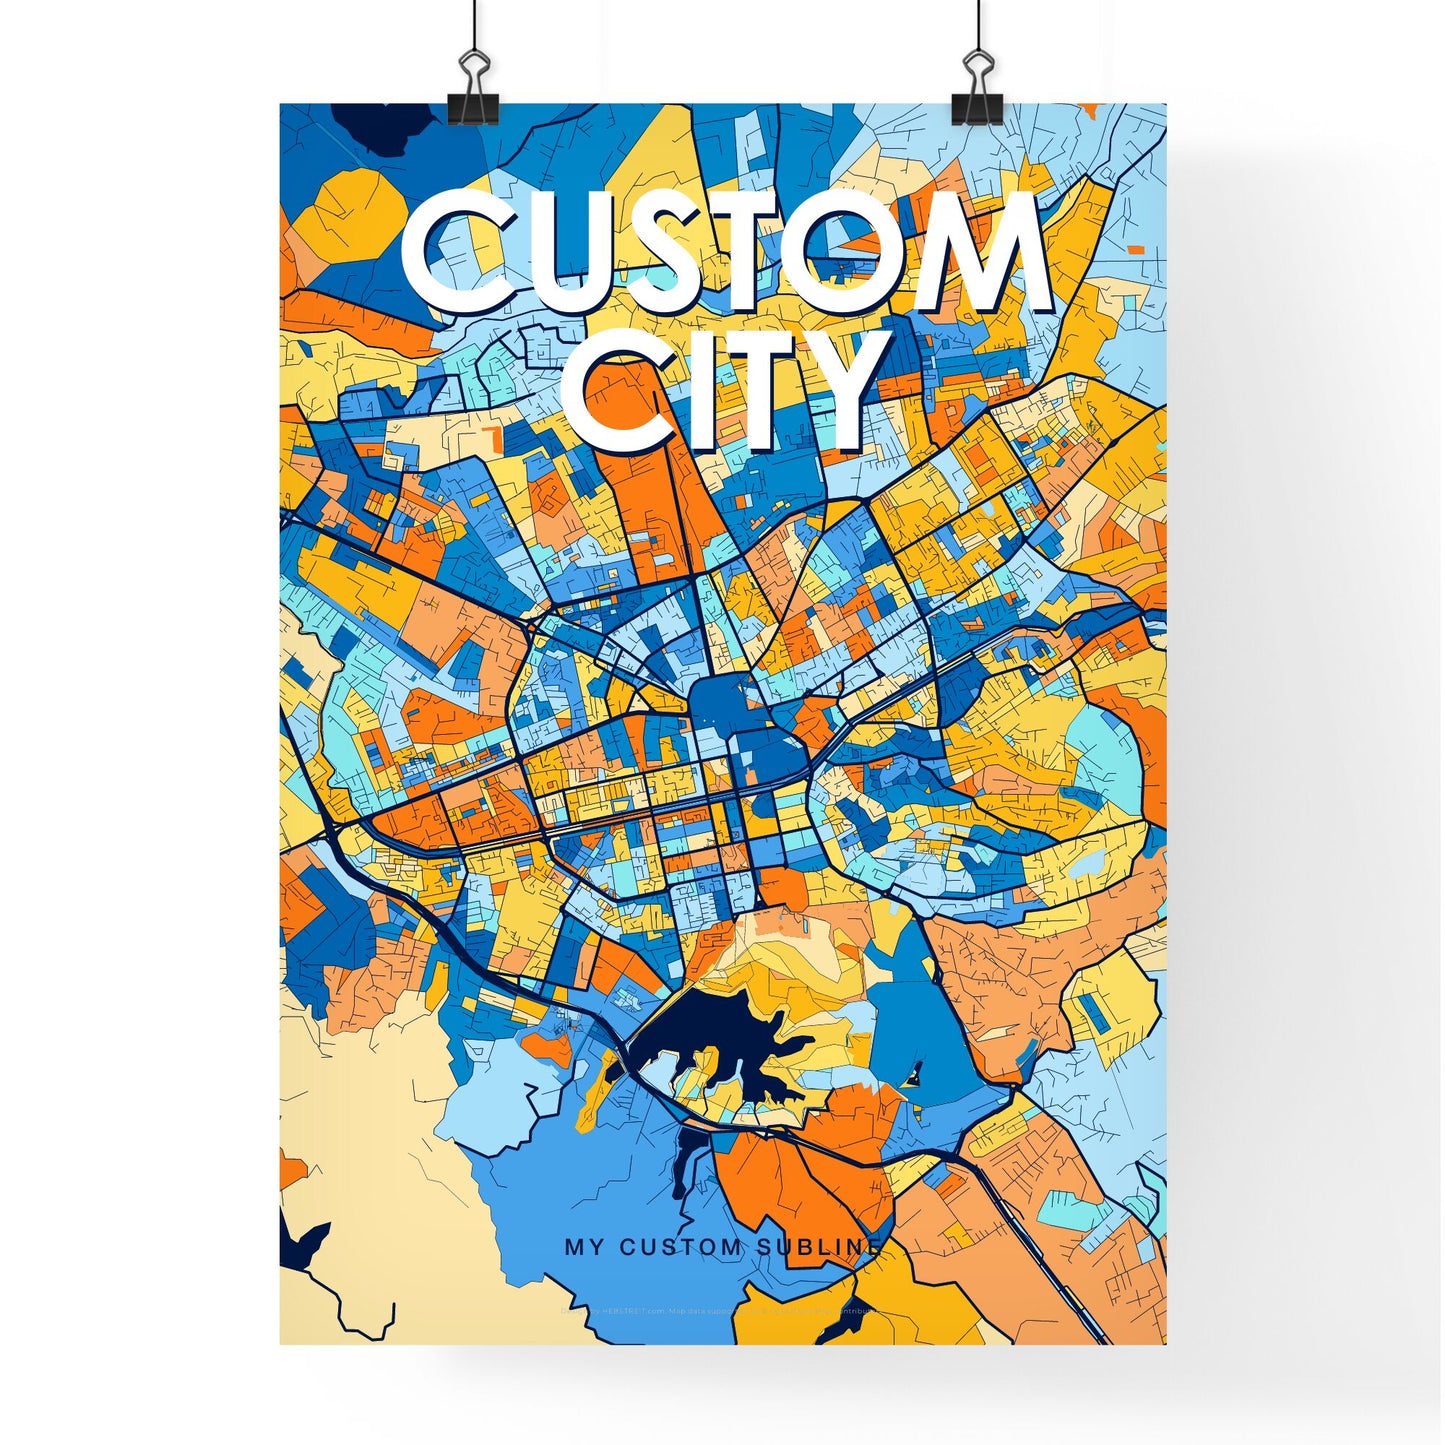 Custom VIBRANT BLUE ORANGE City Map - Design your own map poster now!